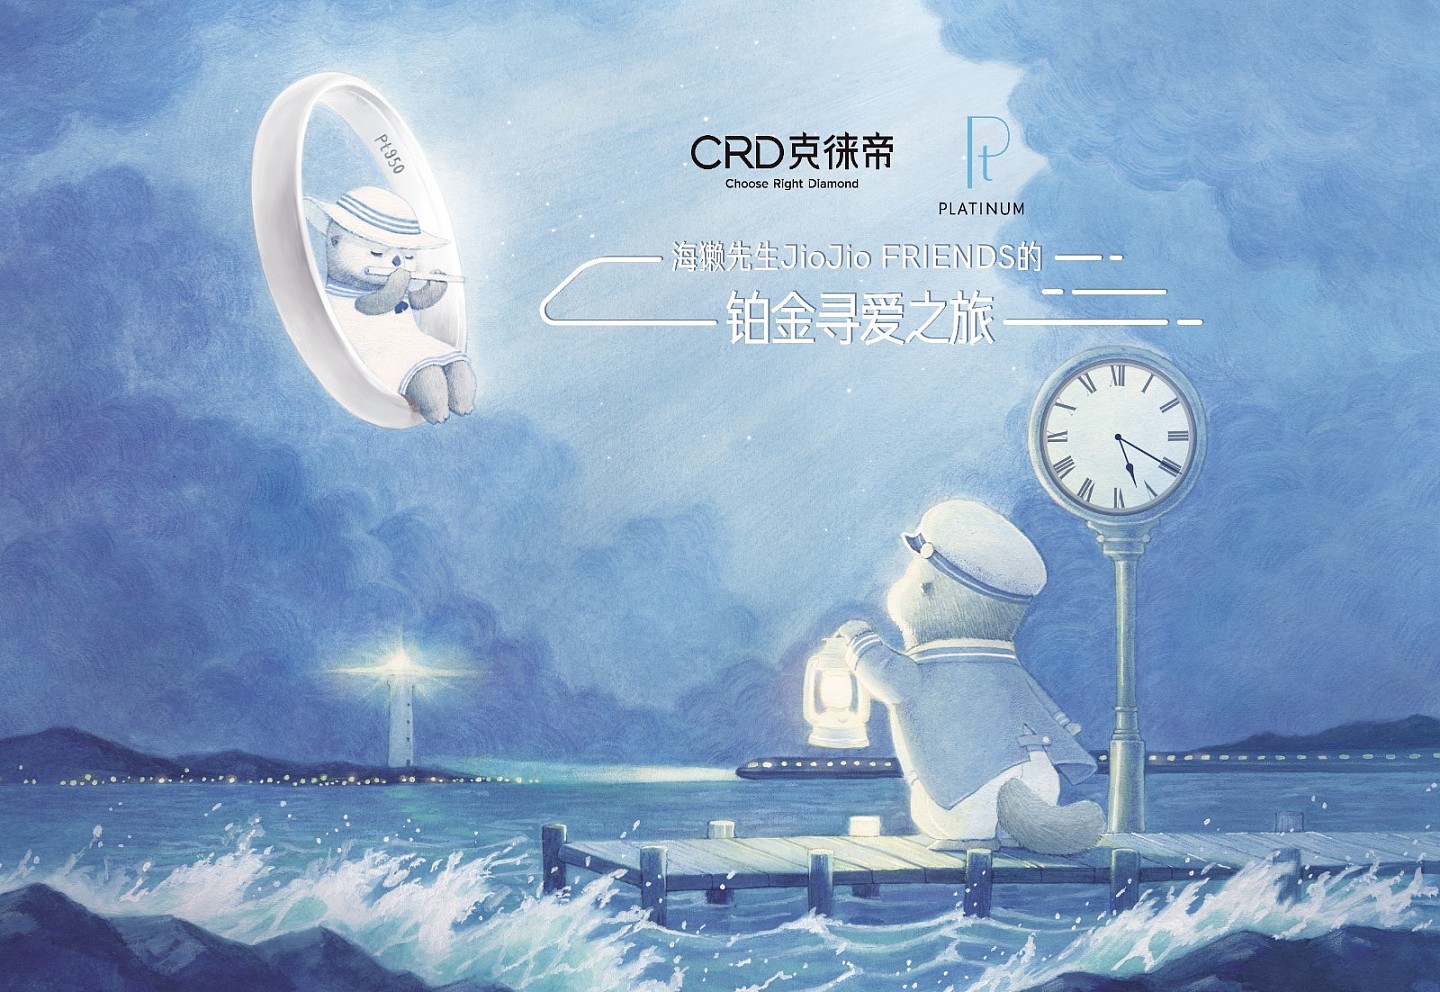 CRD携手国际铂金协会（PGI）与海獭先生JioJio，臻启奇幻圣诞以爱之名为爱发声 - 1